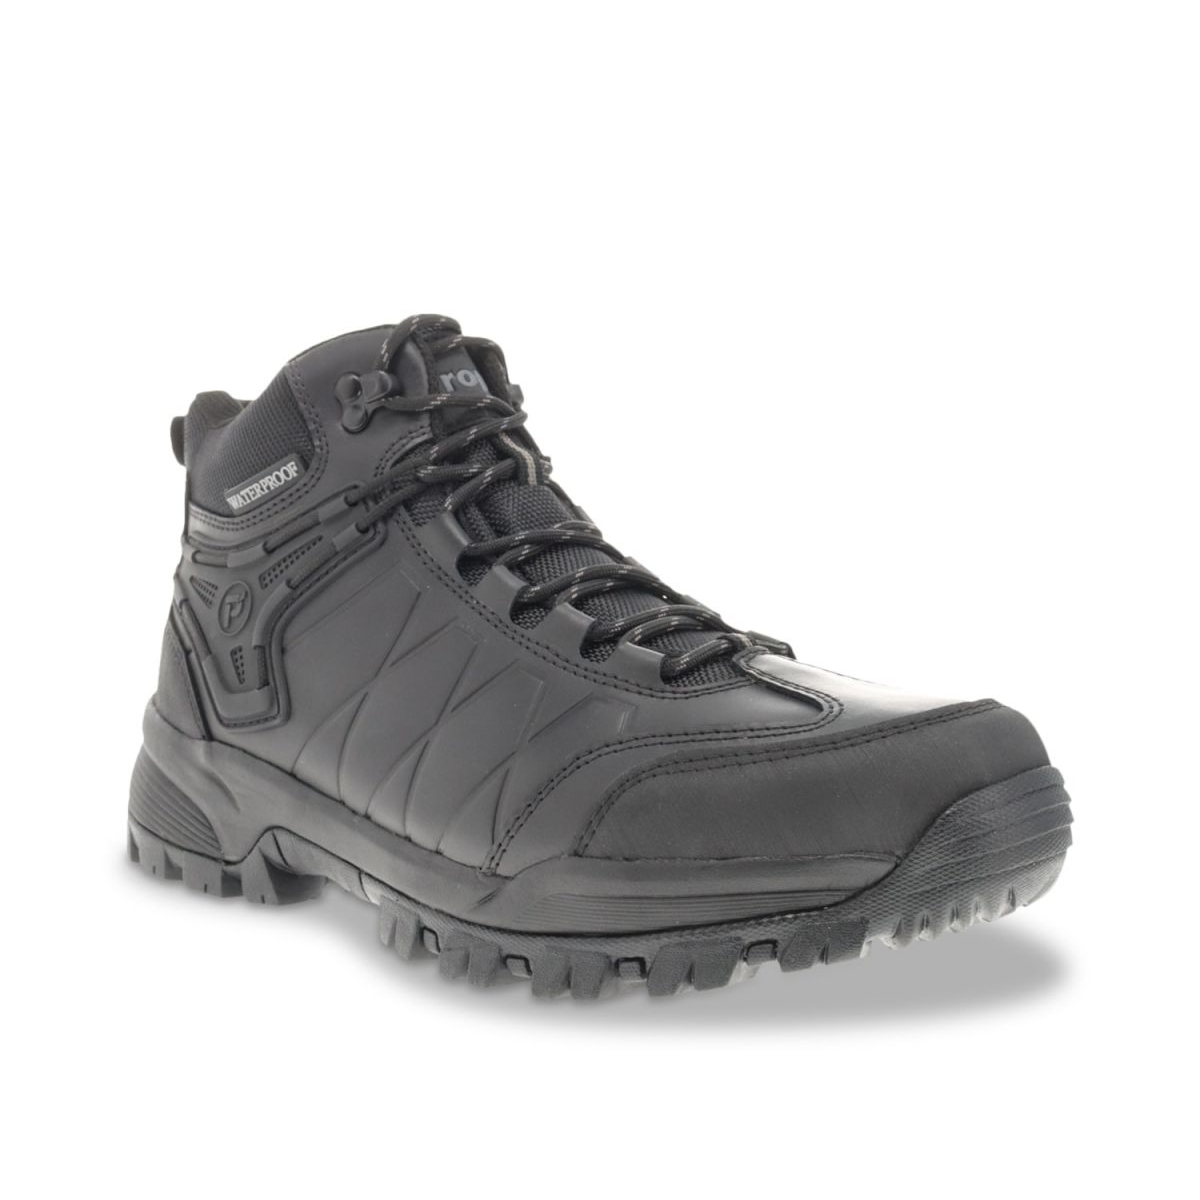 Propet Men's Ridge Walker Force Hiking Boots Black - MBA052LBLK BLACK - BLACK, 9